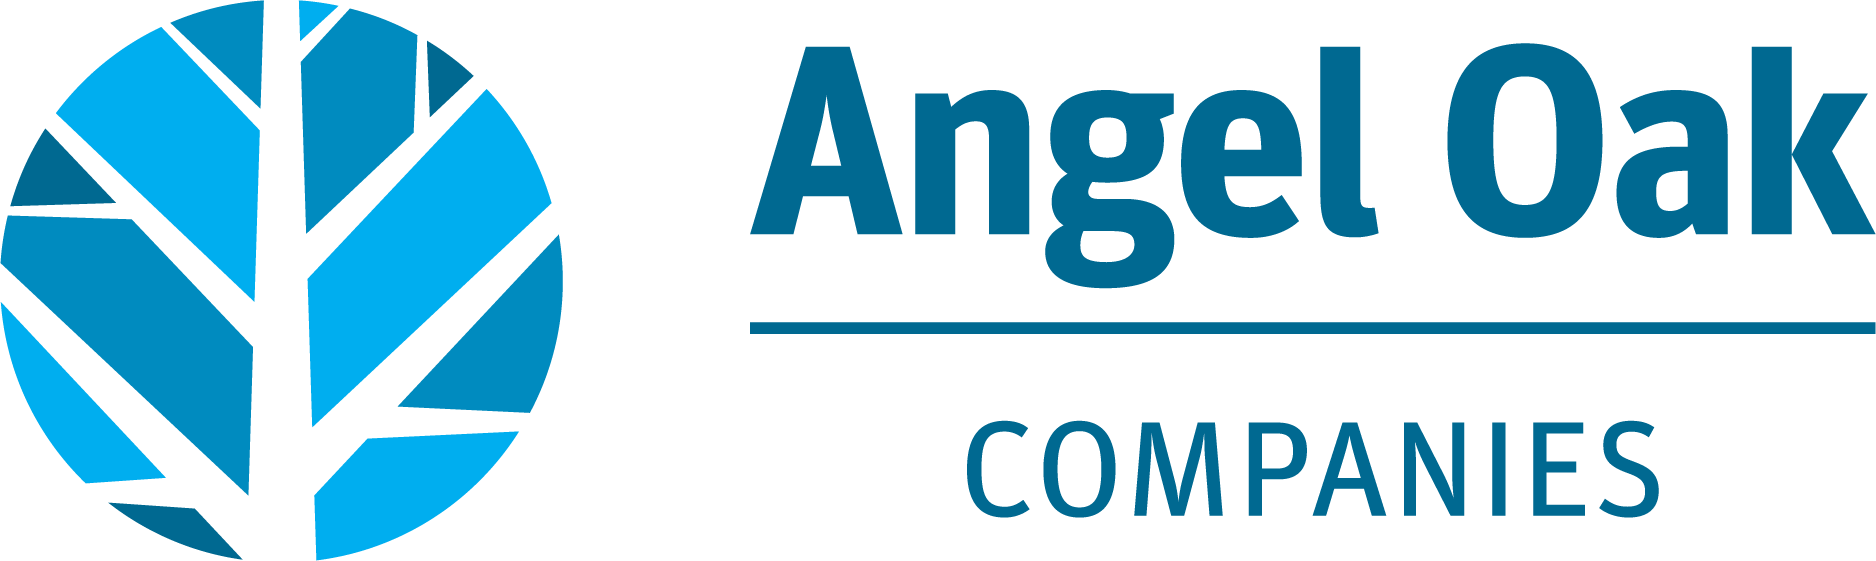 Angel Oak Companies Company Logo